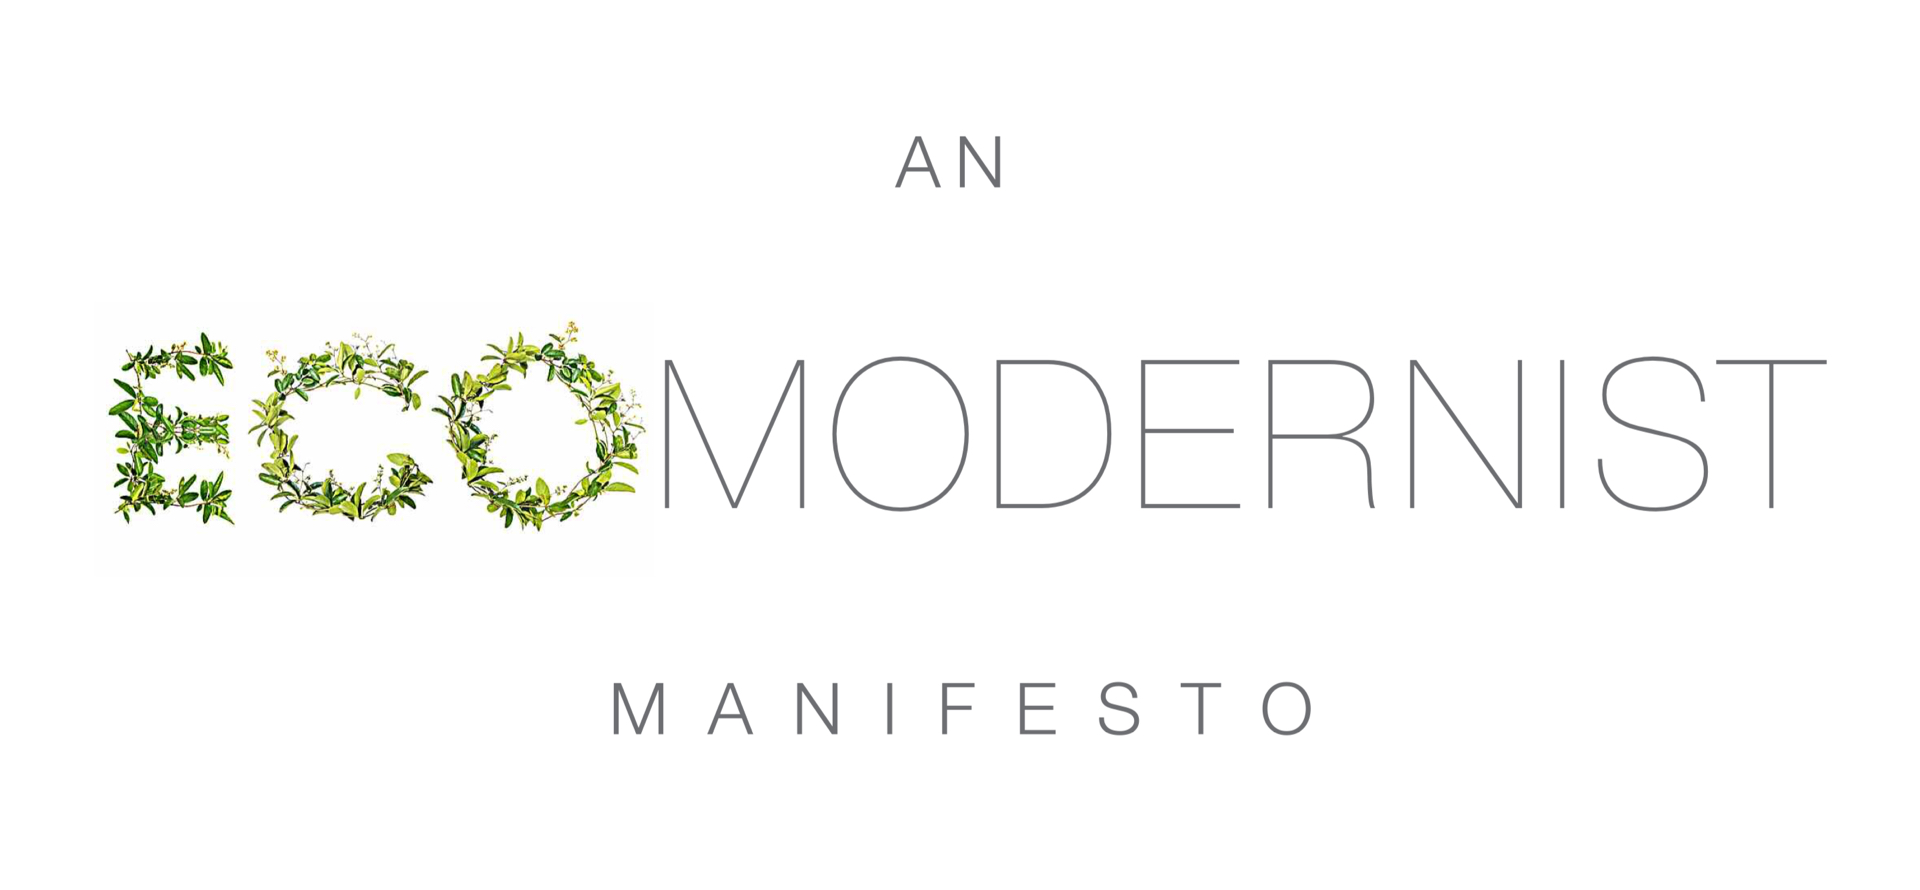 An Ecomodernist Manifesto